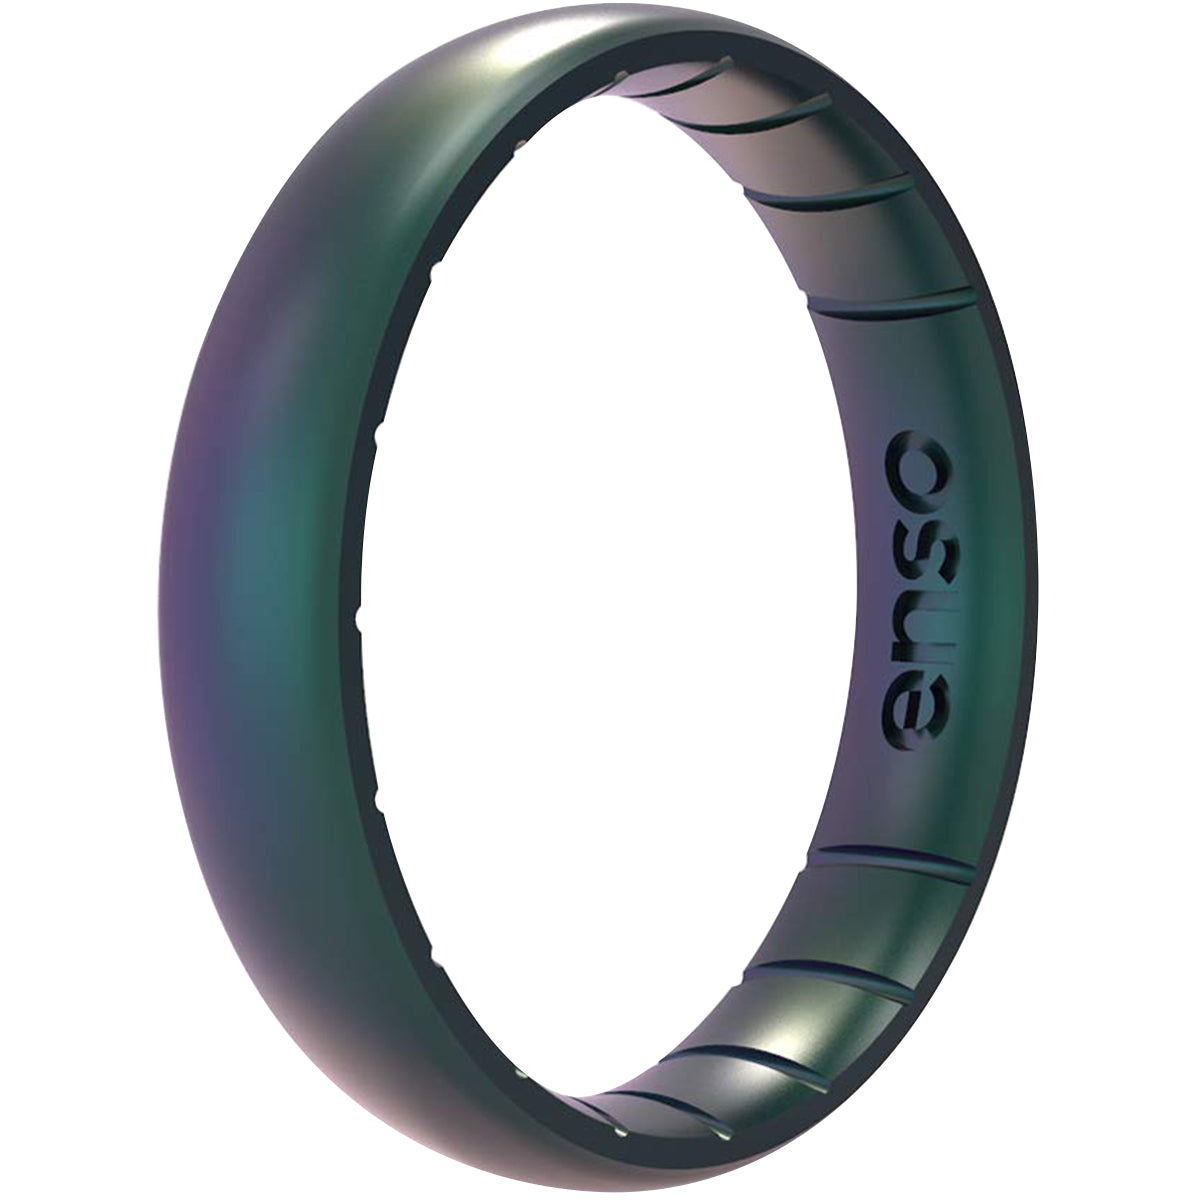 Enso Rings Thin Legends Series Silicone Ring - Mermaid Enso Rings